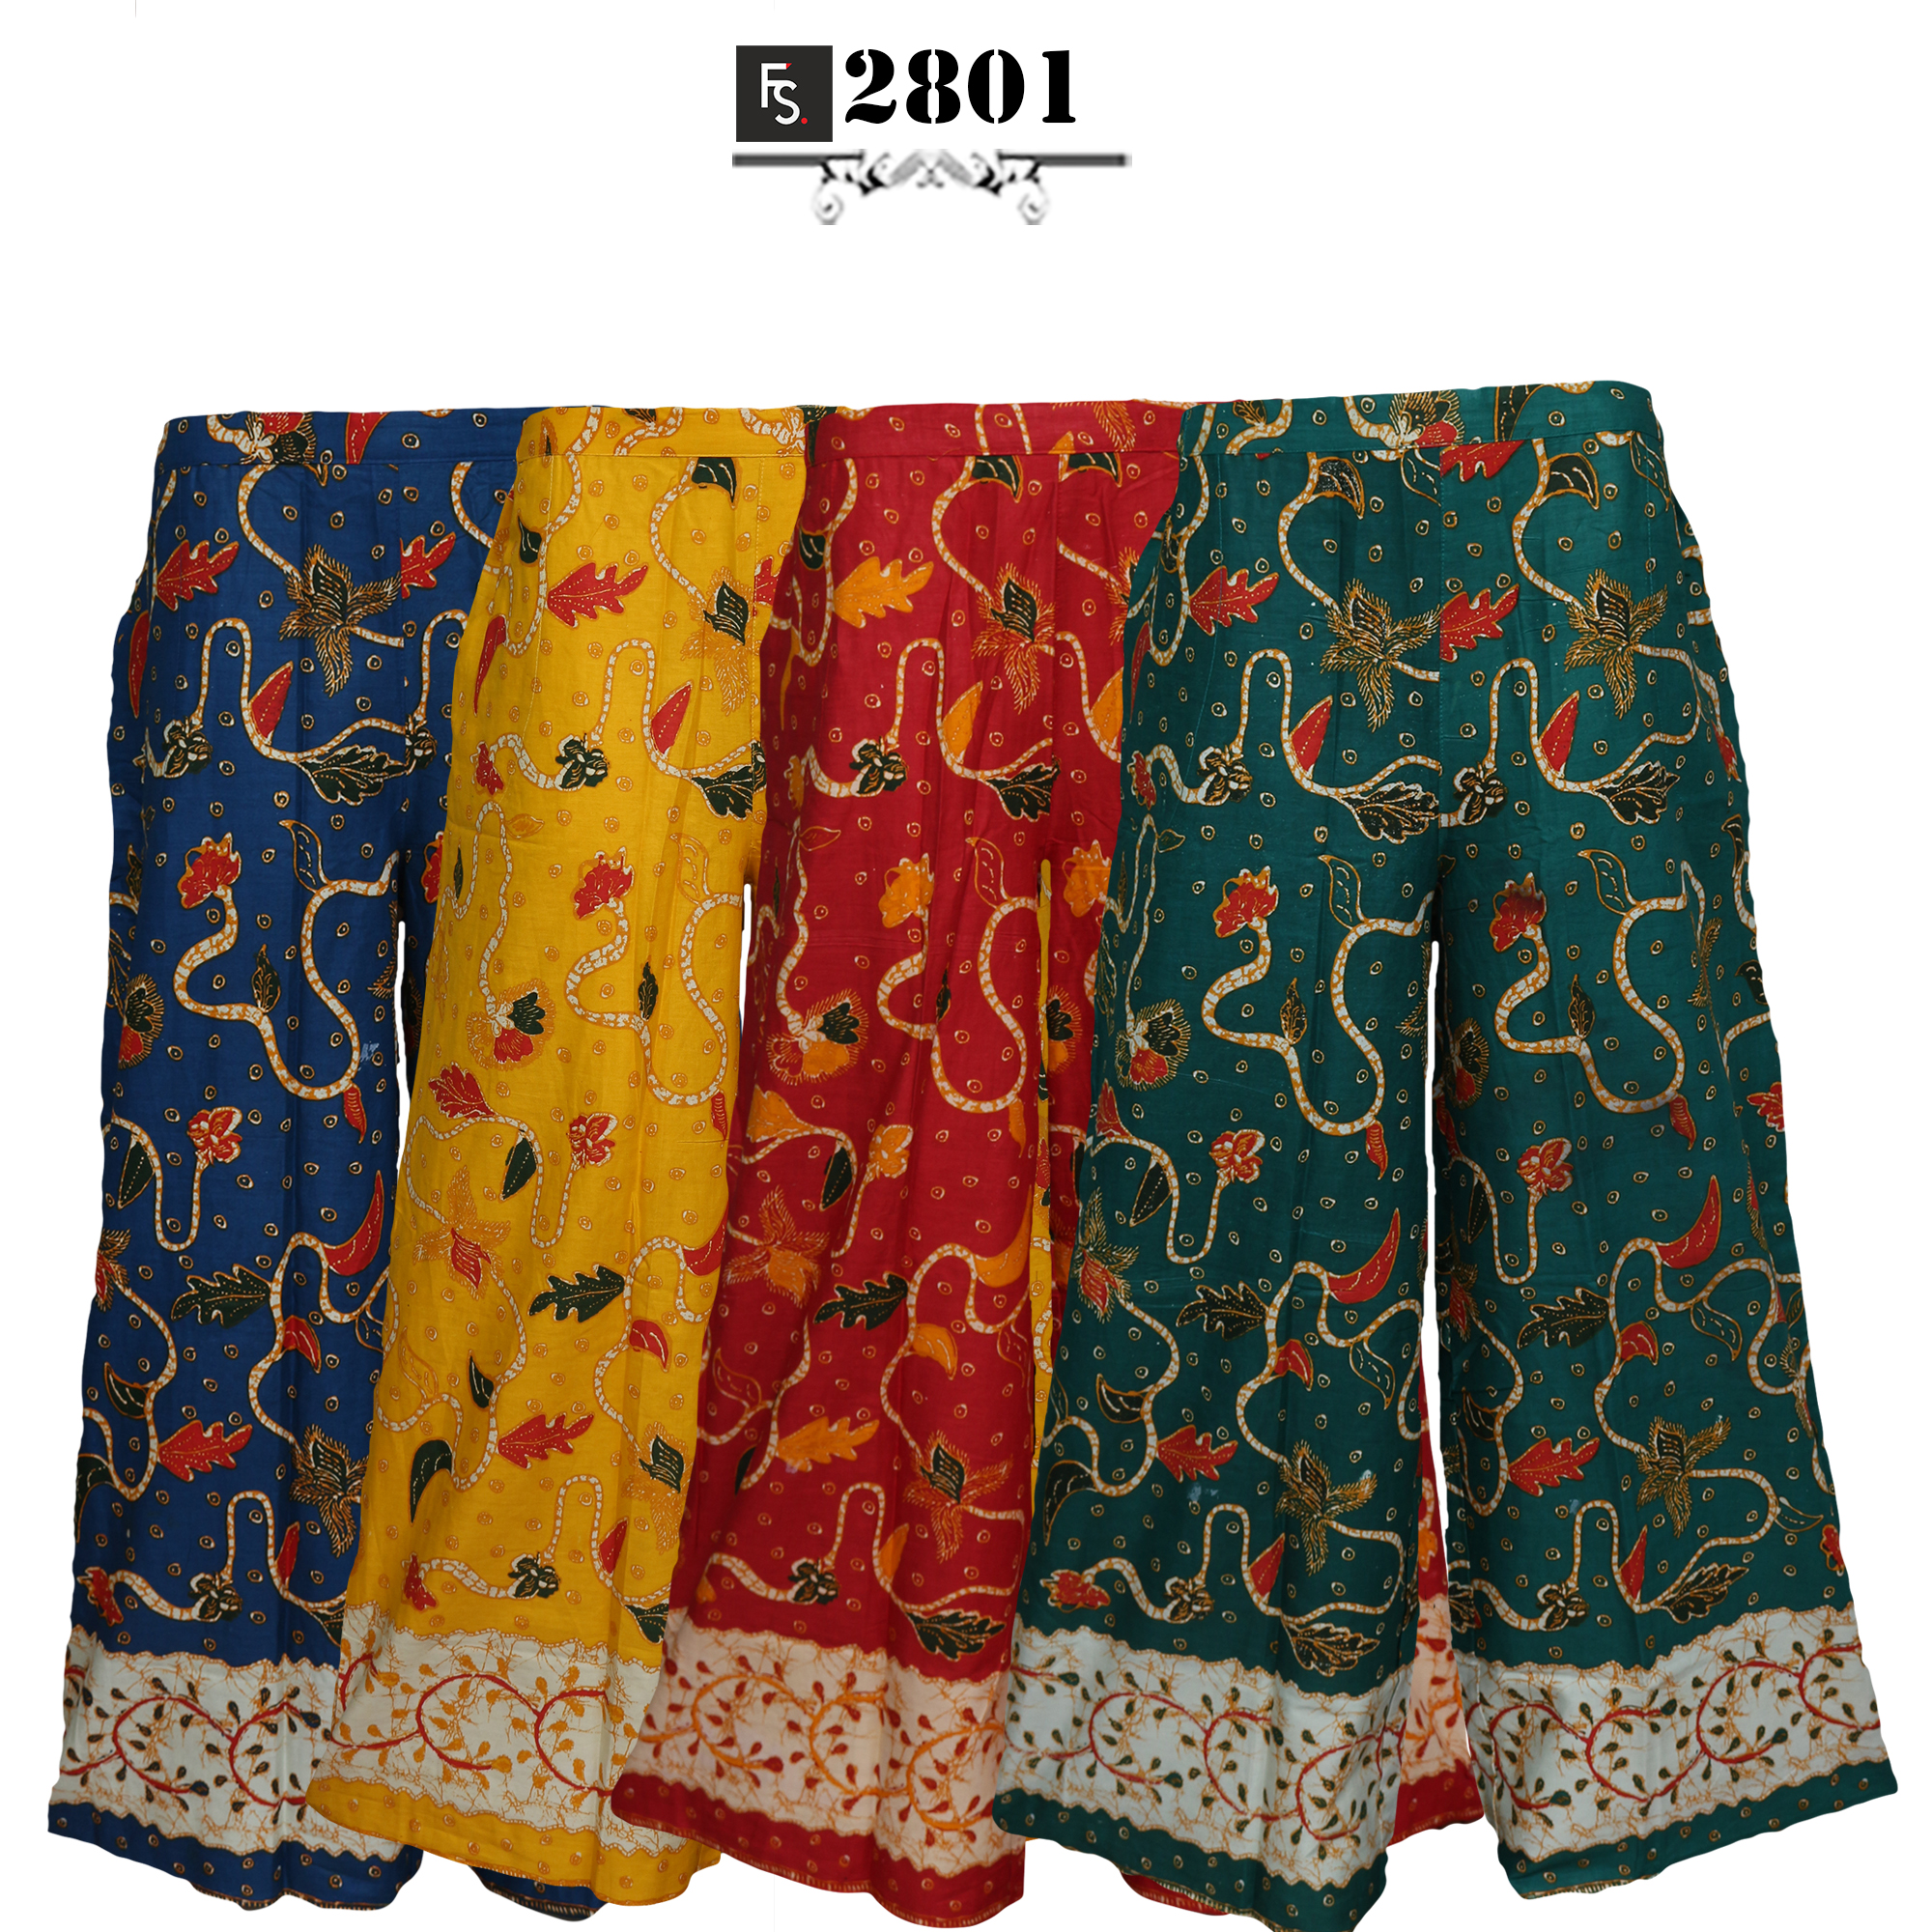  Celana  Batik Aleena FS2801 Fika Shop